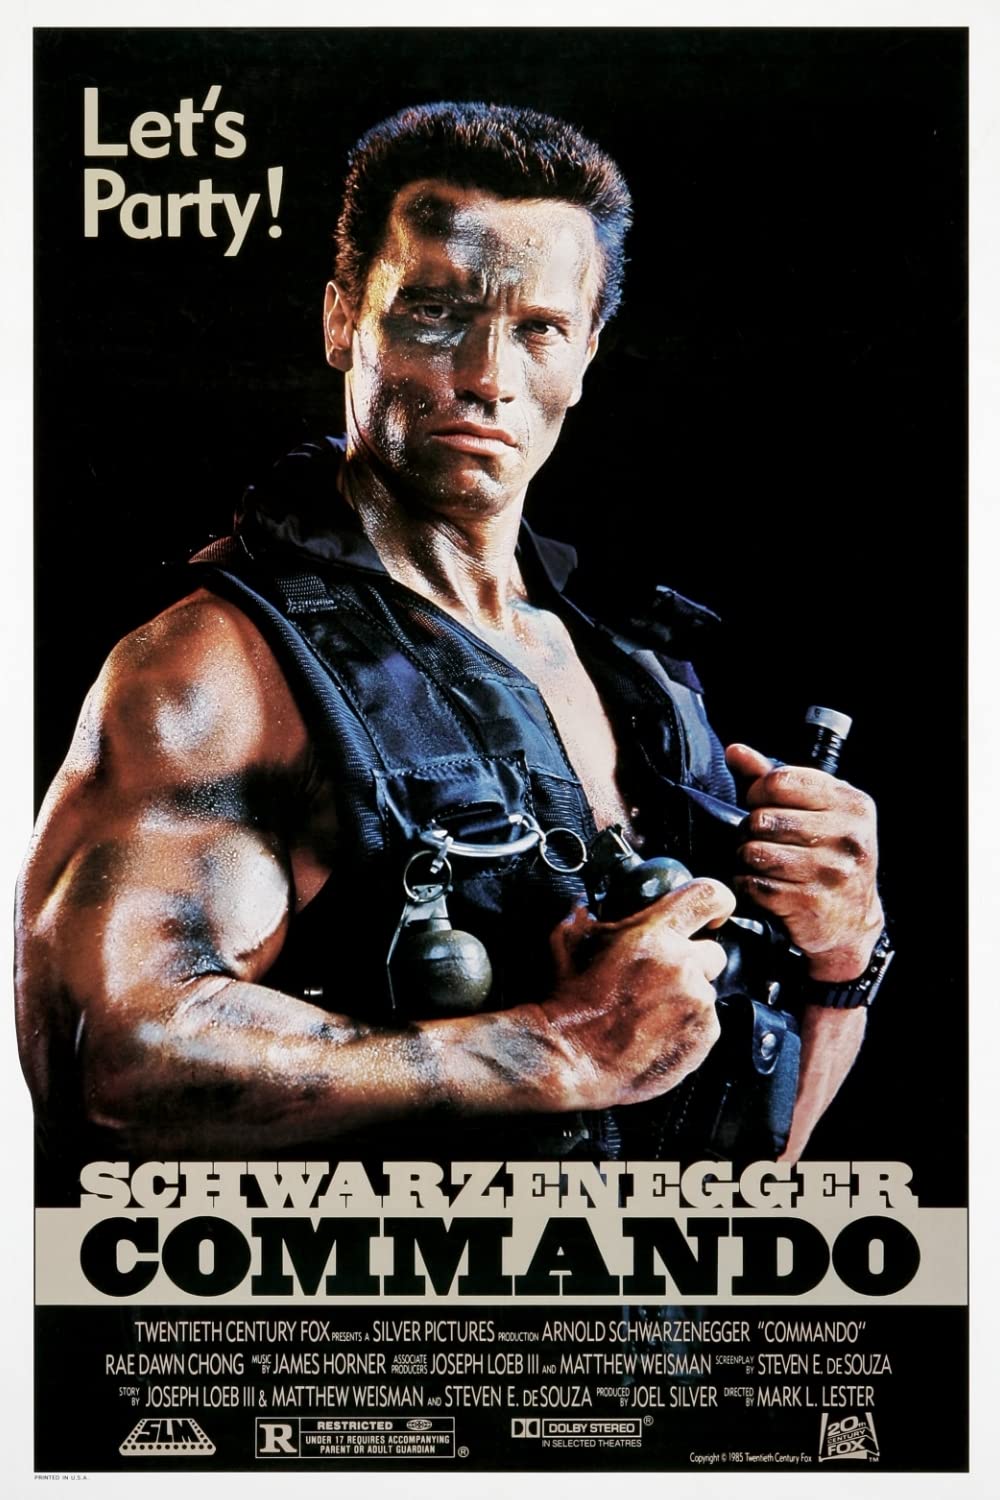 Arnold Schwarzenegger Birthday  must watch movies  ജിമ്മന്‍മാരുടെ സ്വന്തം അര്‍ണോള്‍ഡ്  ബോഡി ബിള്‍ഡര്‍  മിസ്‌റ്റര്‍ യൂണിവേഴ്‌സ്  The Terminator  Predator  ജെയിംസ് കാമറൂണ്‍